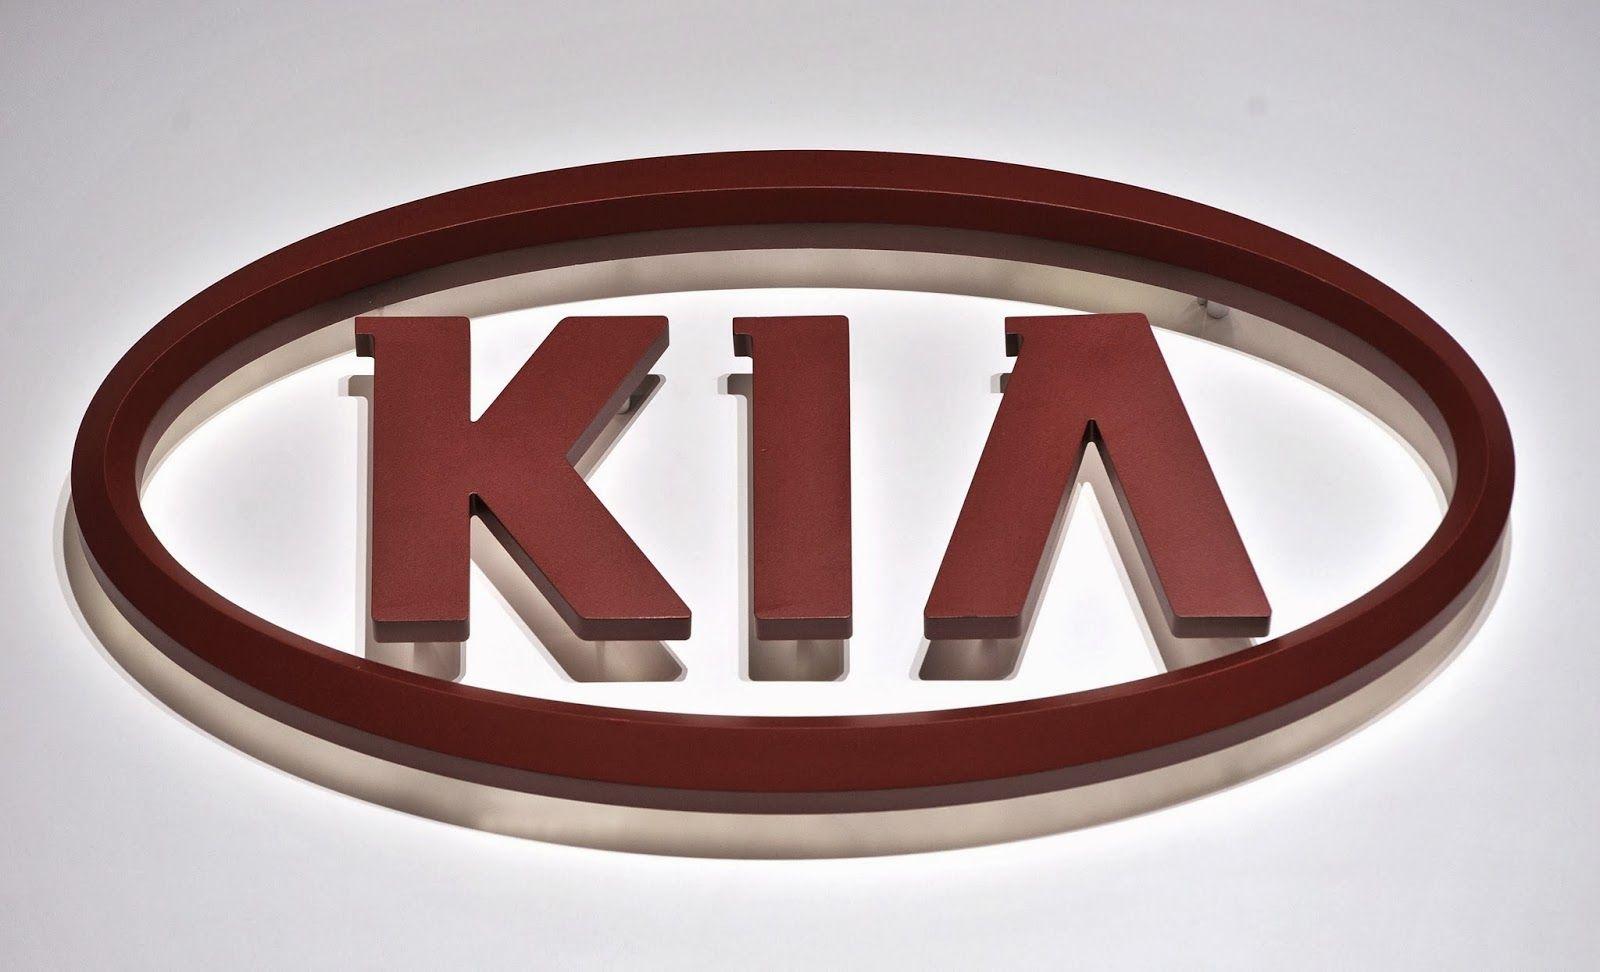 Company with Red Oval Logo - Kia Logo, Kia Car Symbol Meaning and History | Car Brand Names.com